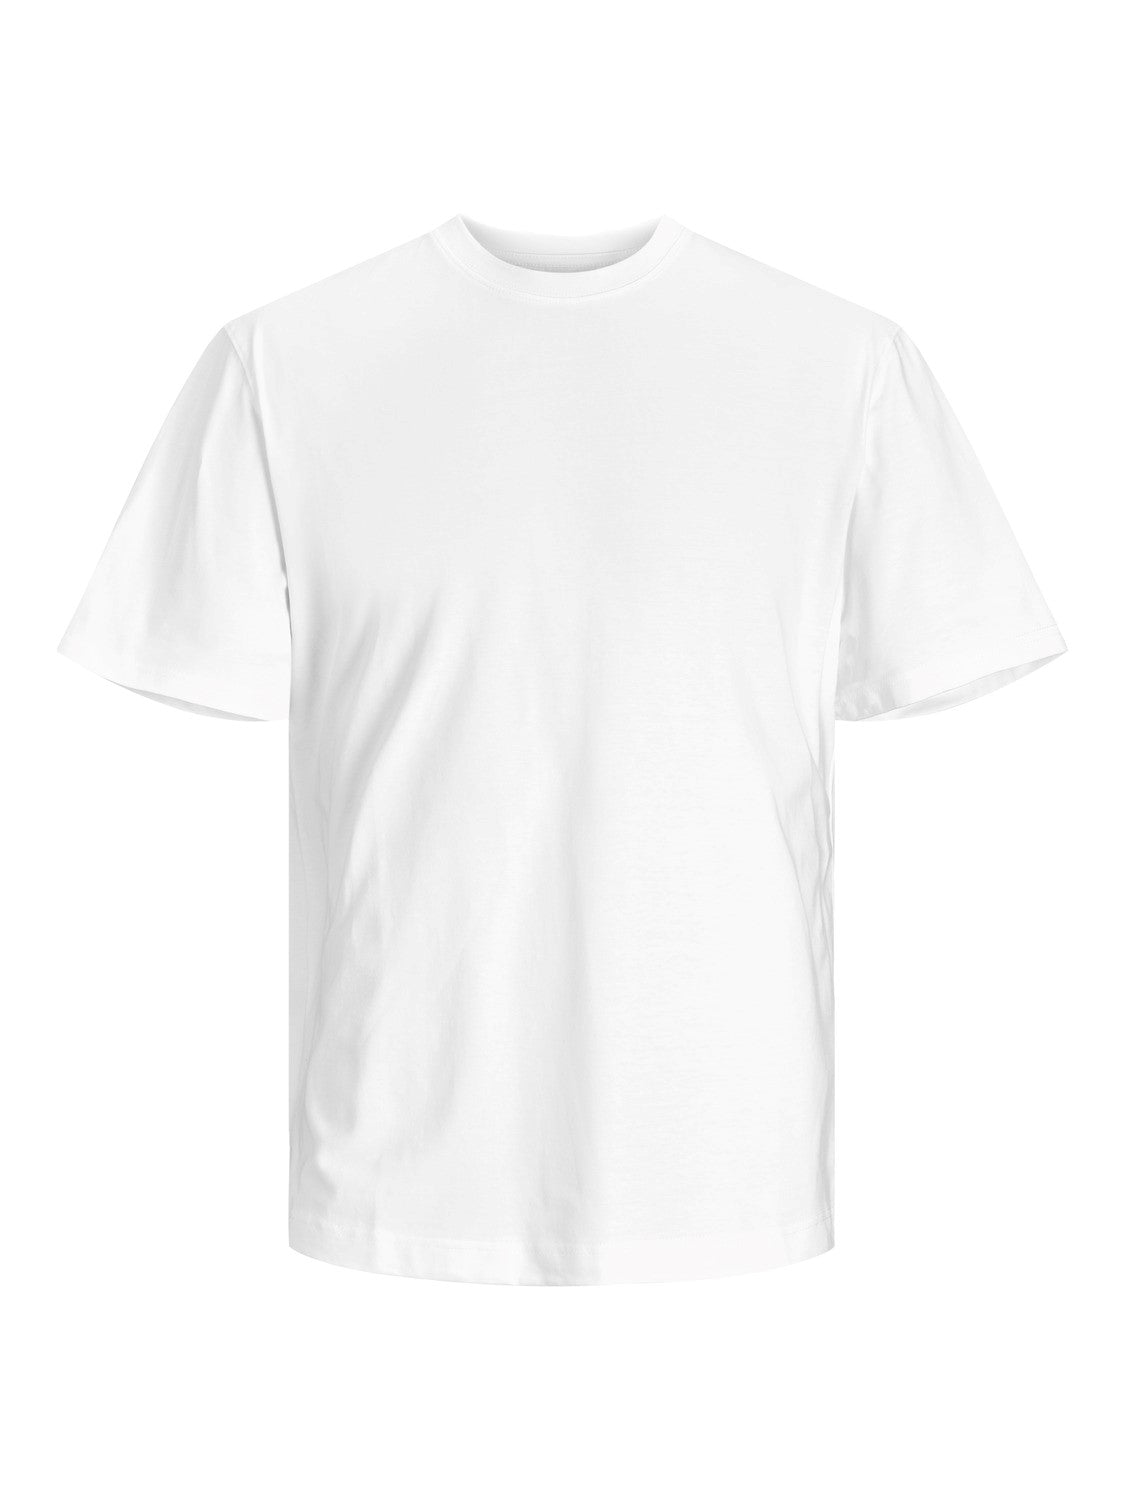 JJERELAXED Relaxed T-Shirt White